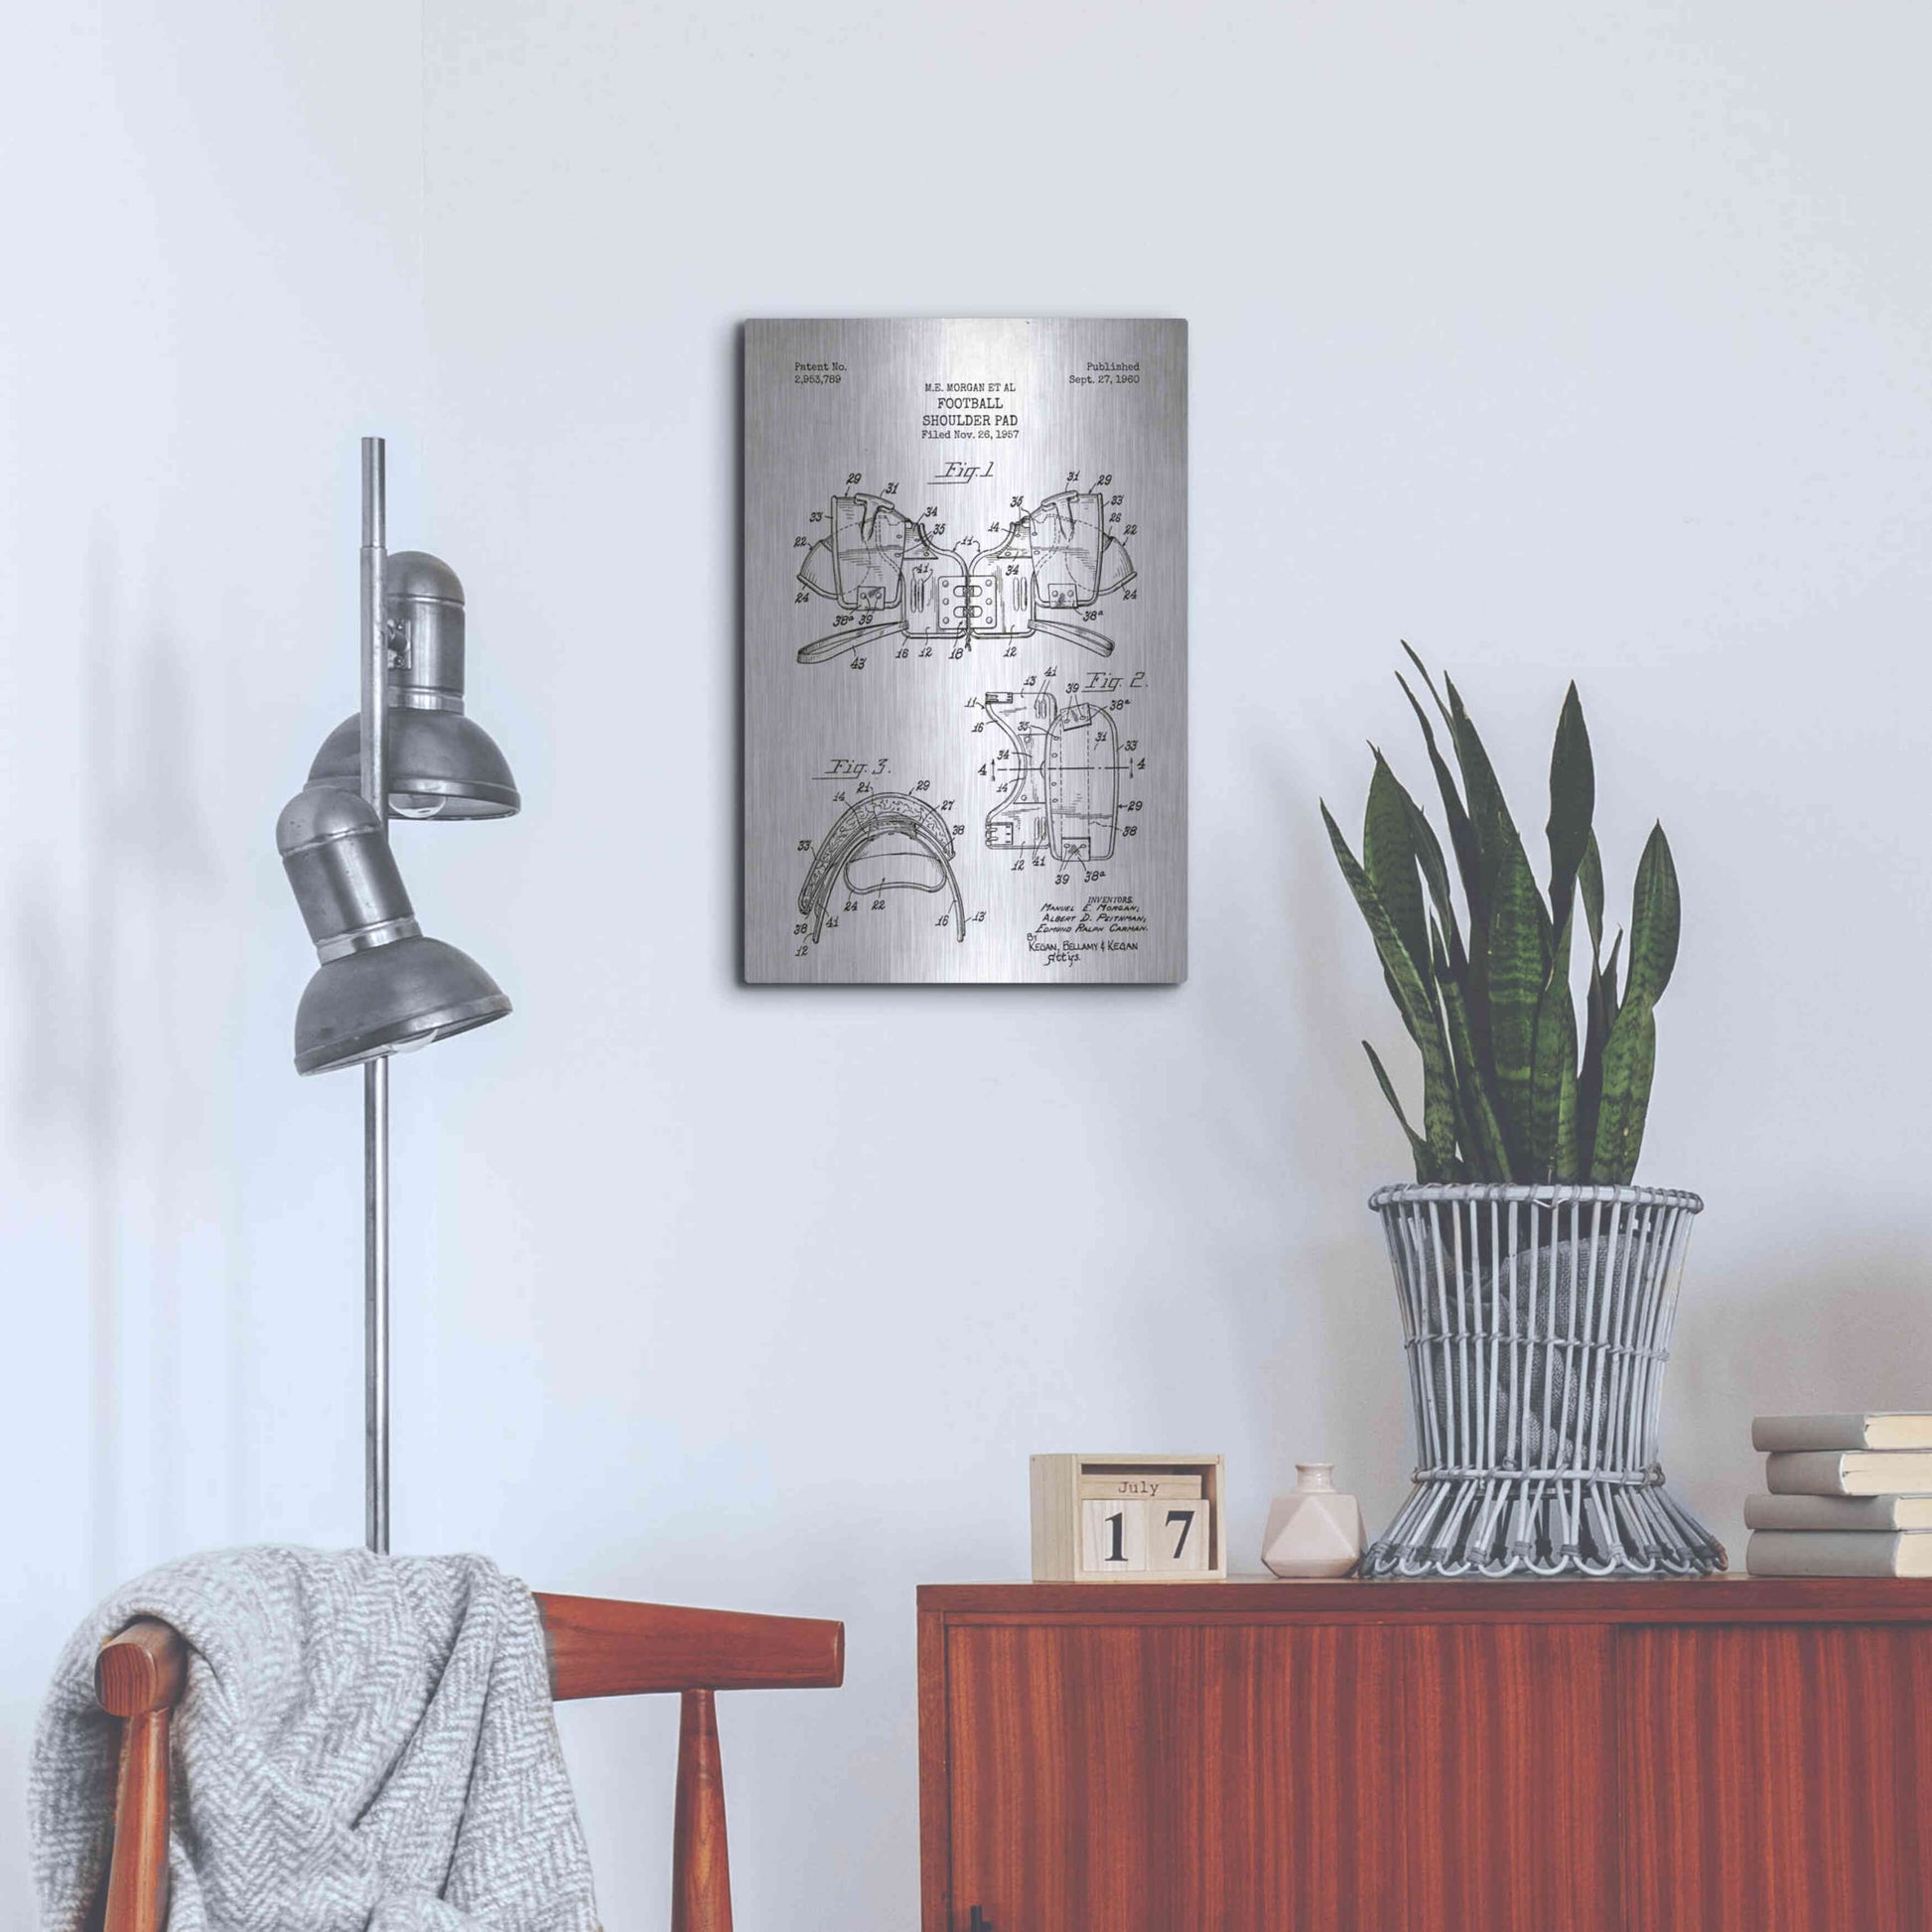 Luxe Metal Art 'Football Shoulder Pad Blueprint Patent White' Metal Wall Art,16x24